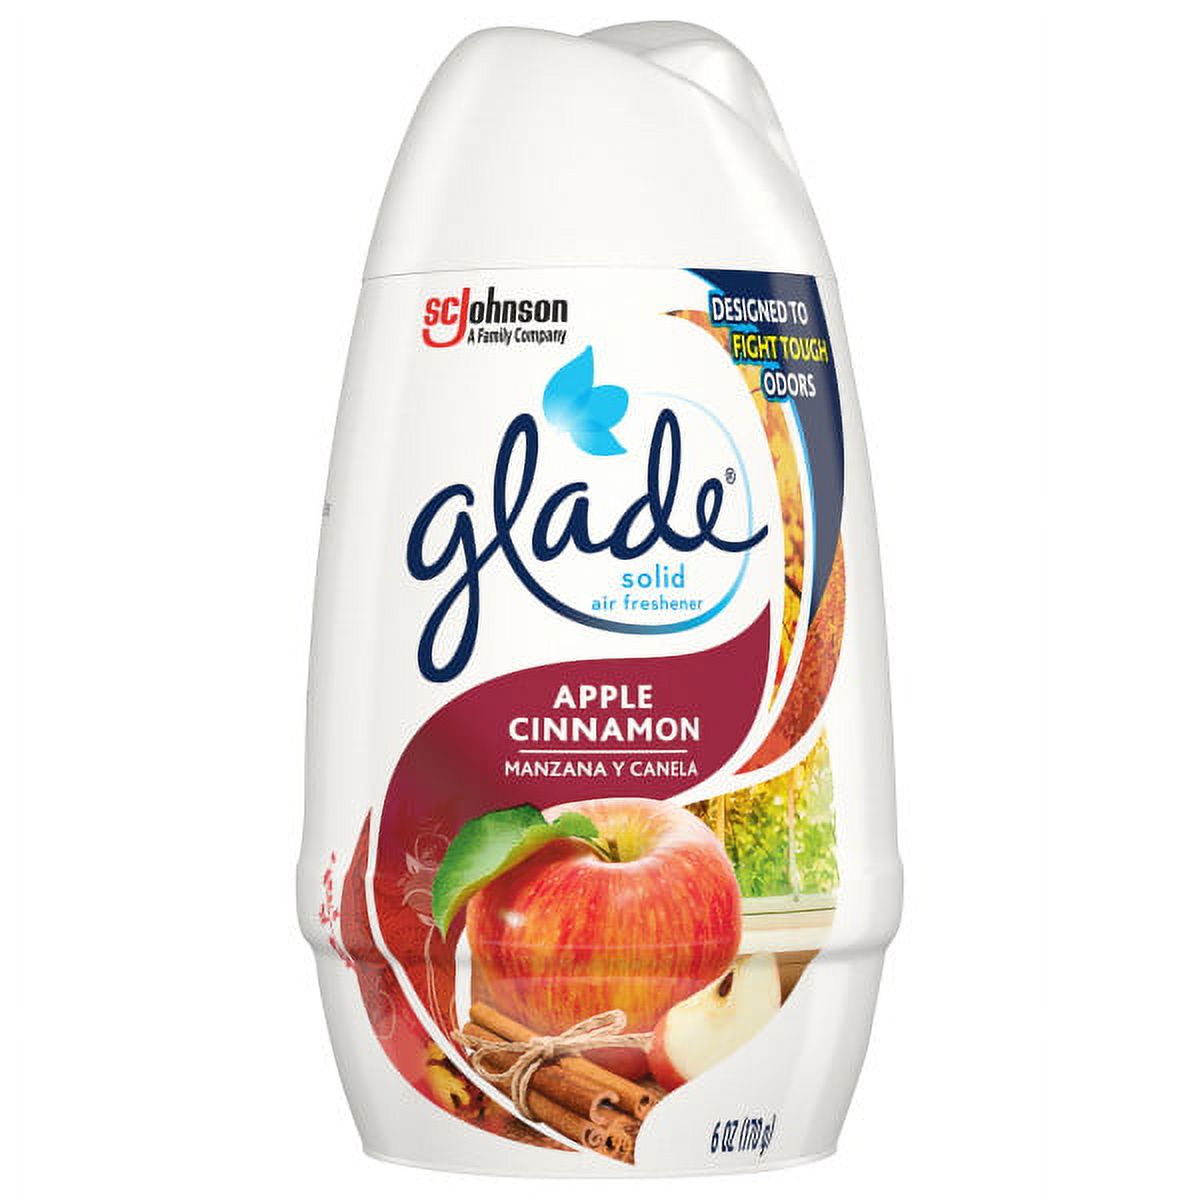 Glade Solid Air Freshener, Apple Cinnamon, 6 oz, Pack of 4 - image 1 of 5